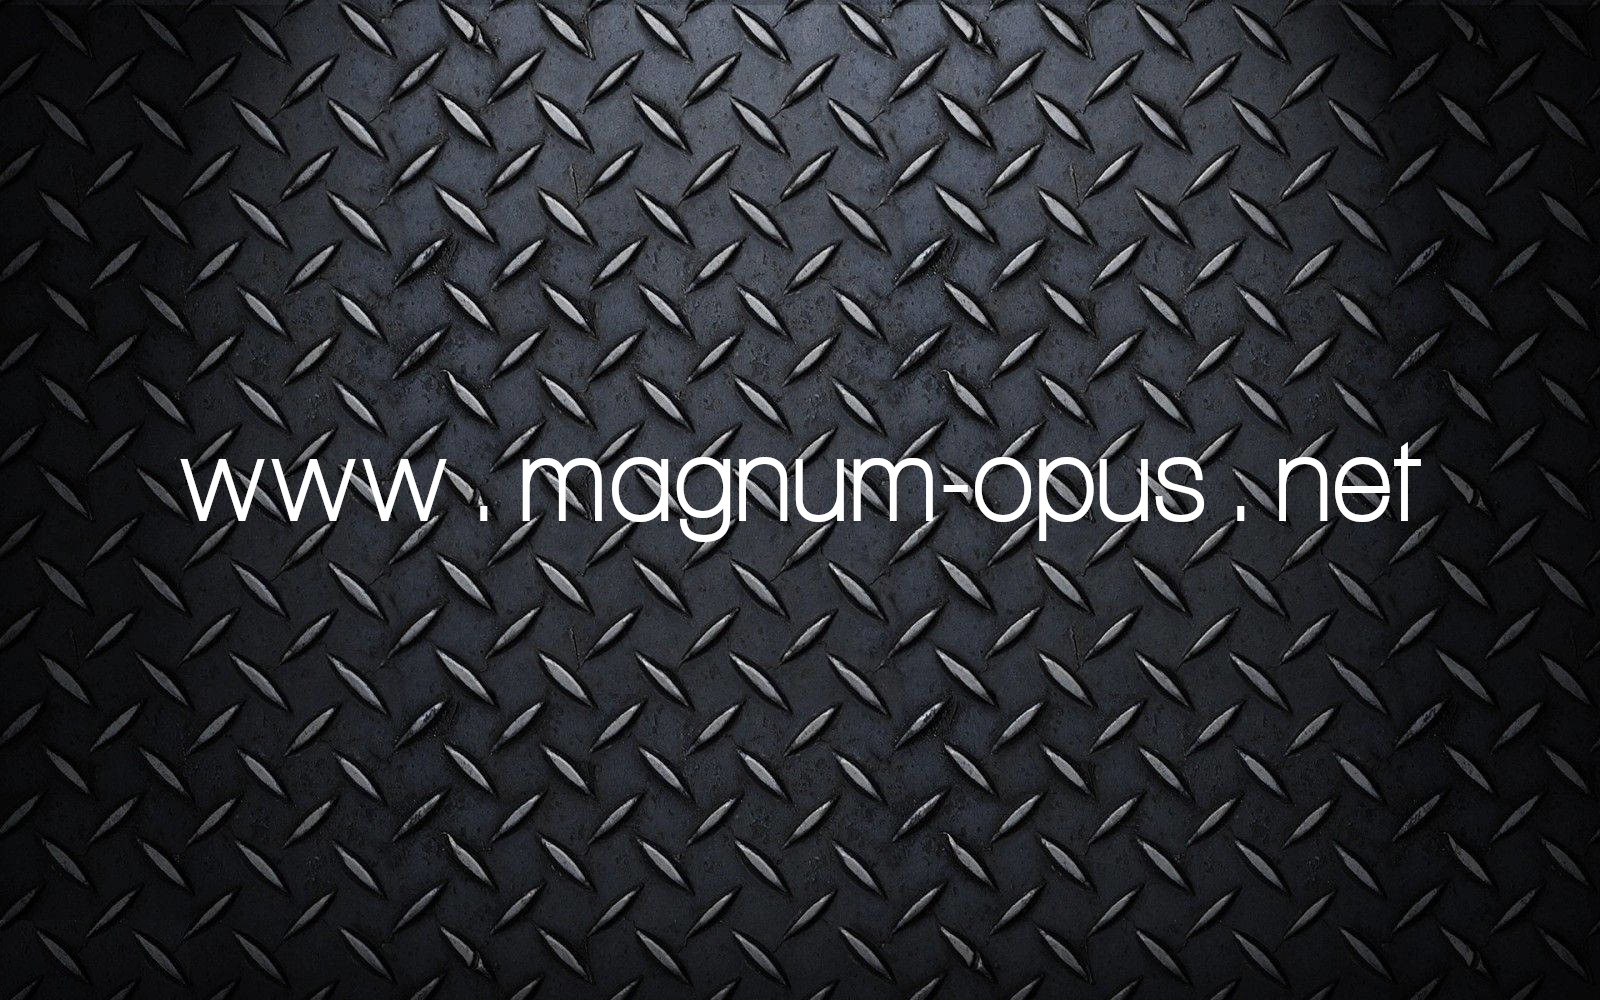 www.magnum-opus.net